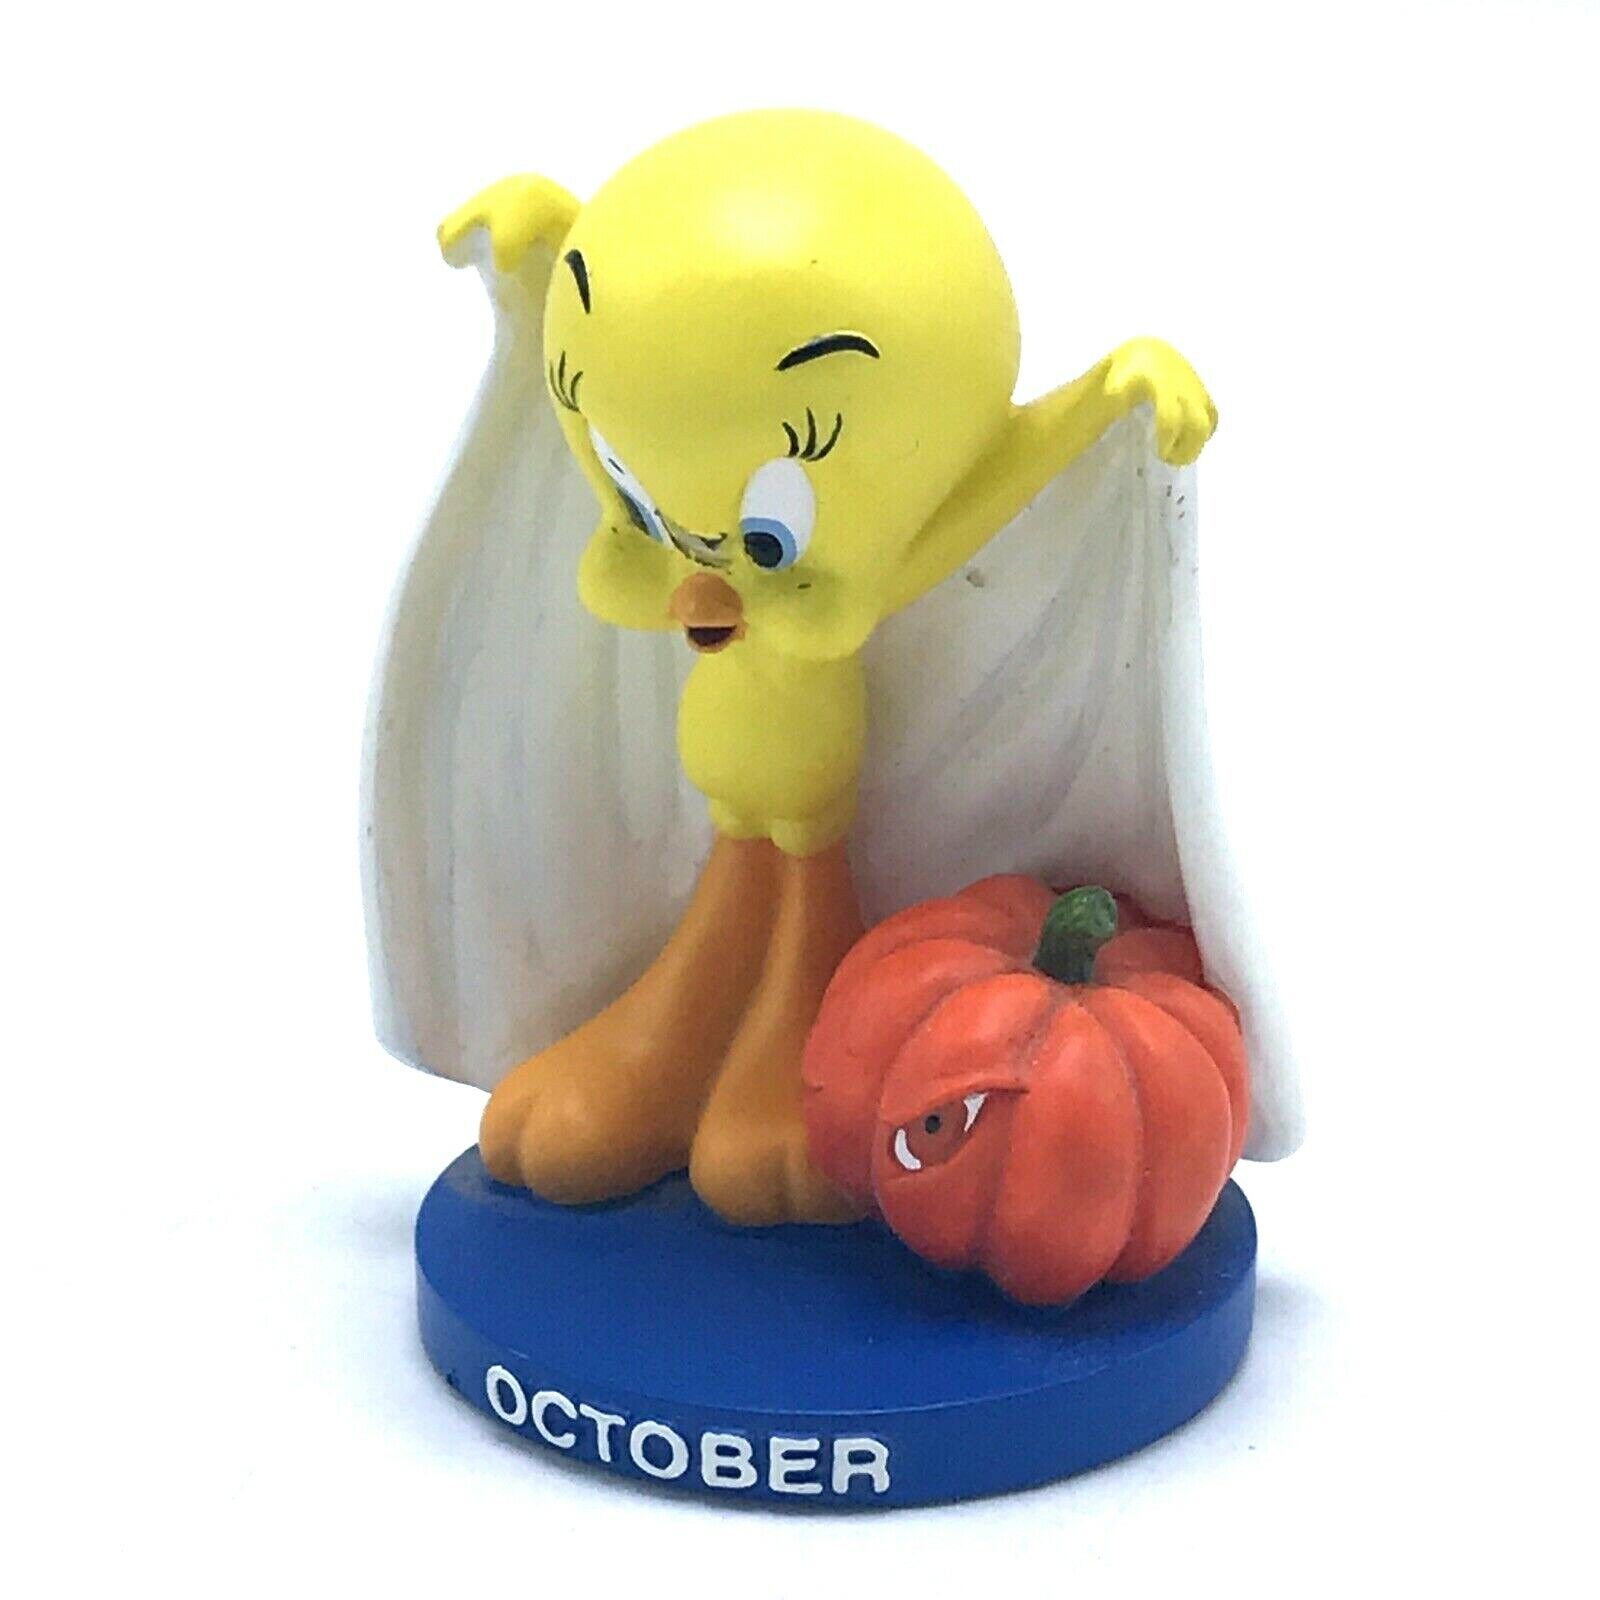 2000 The Danbury Mint Goebel Tweety Bird Calendar Figurine - October FLAW READ